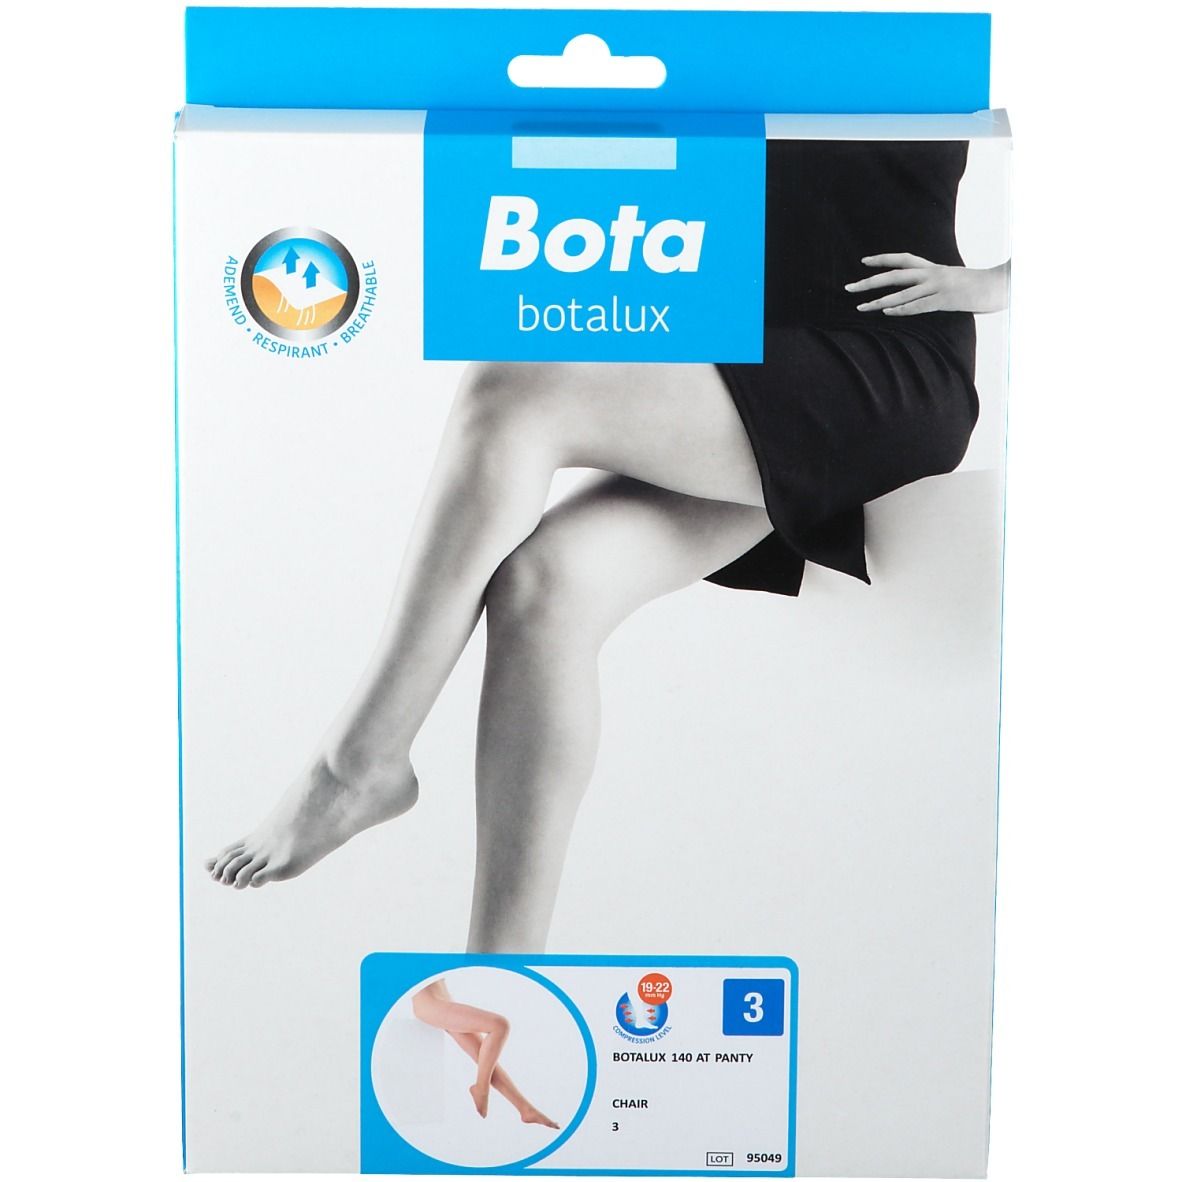 Image of Bota Botalux 140 AT Panty Chair Größe 3